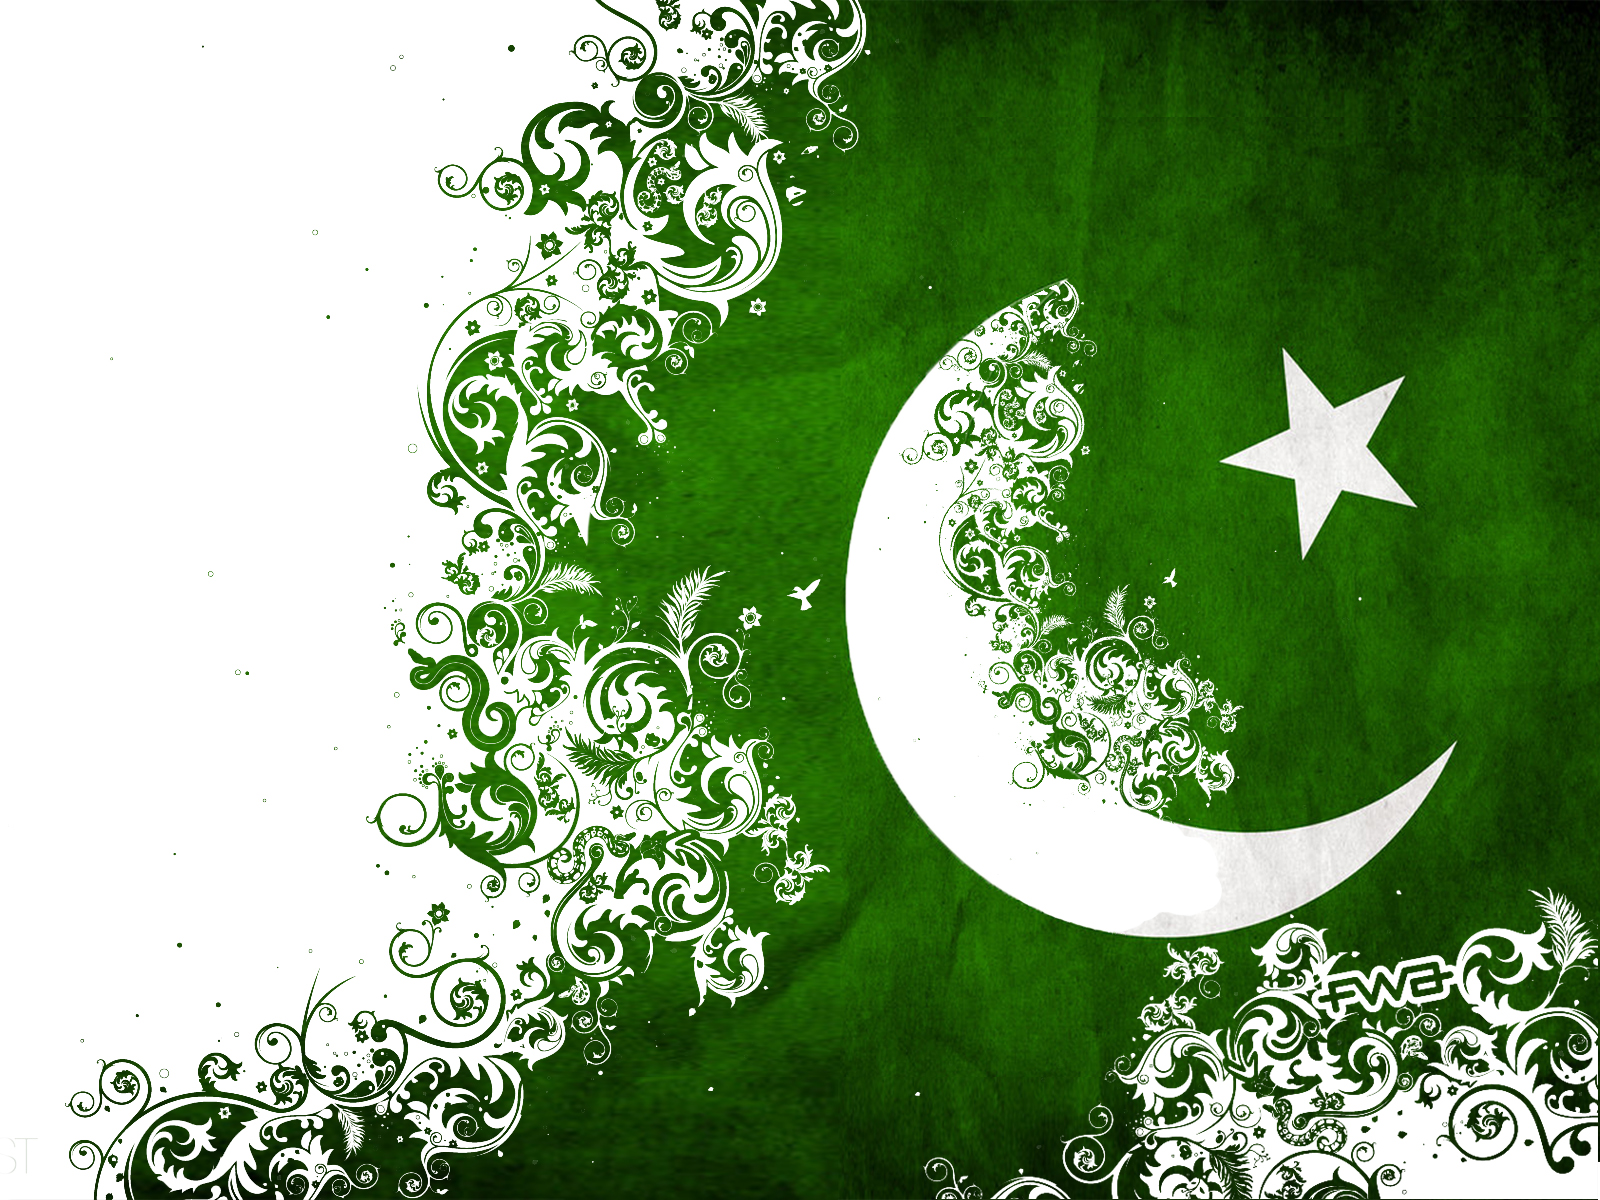 green and white pakistan flag